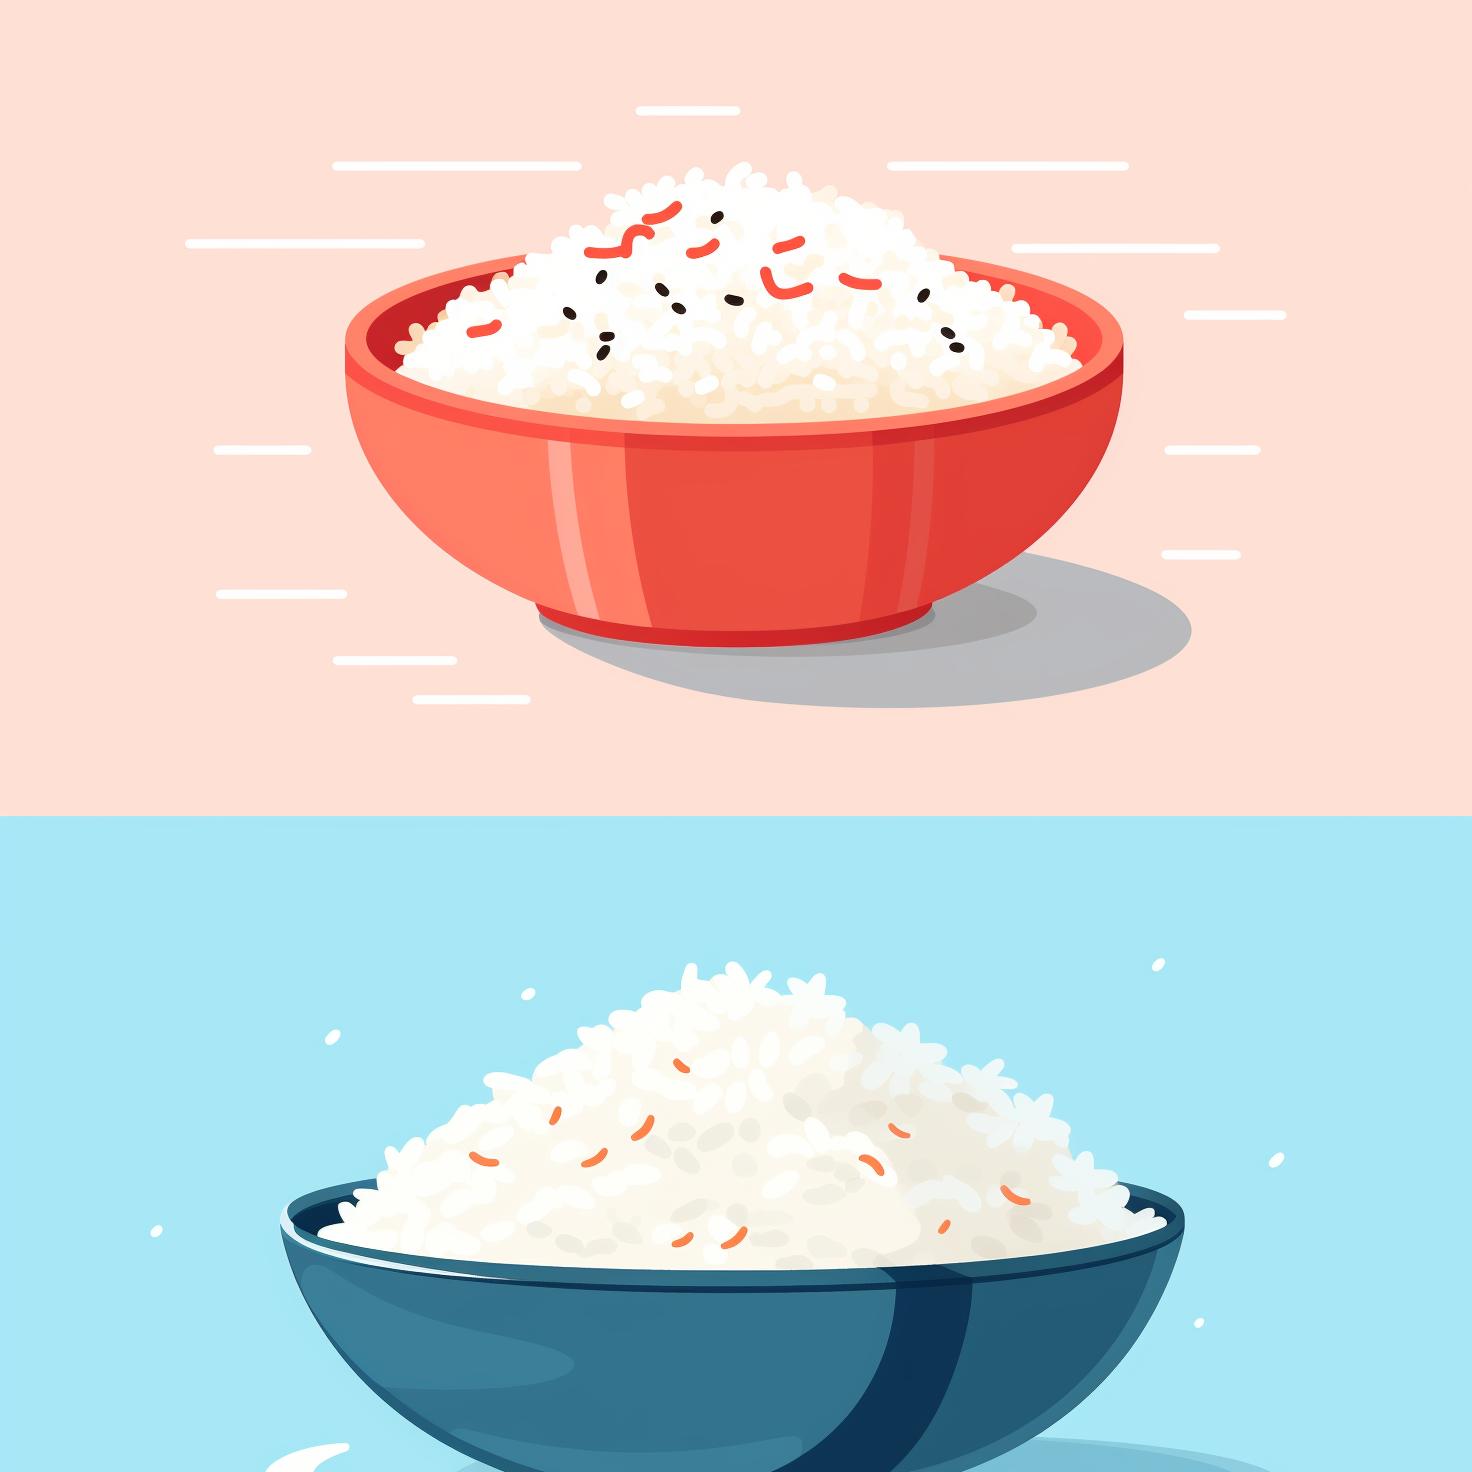 A bowl of seasoned sushi rice